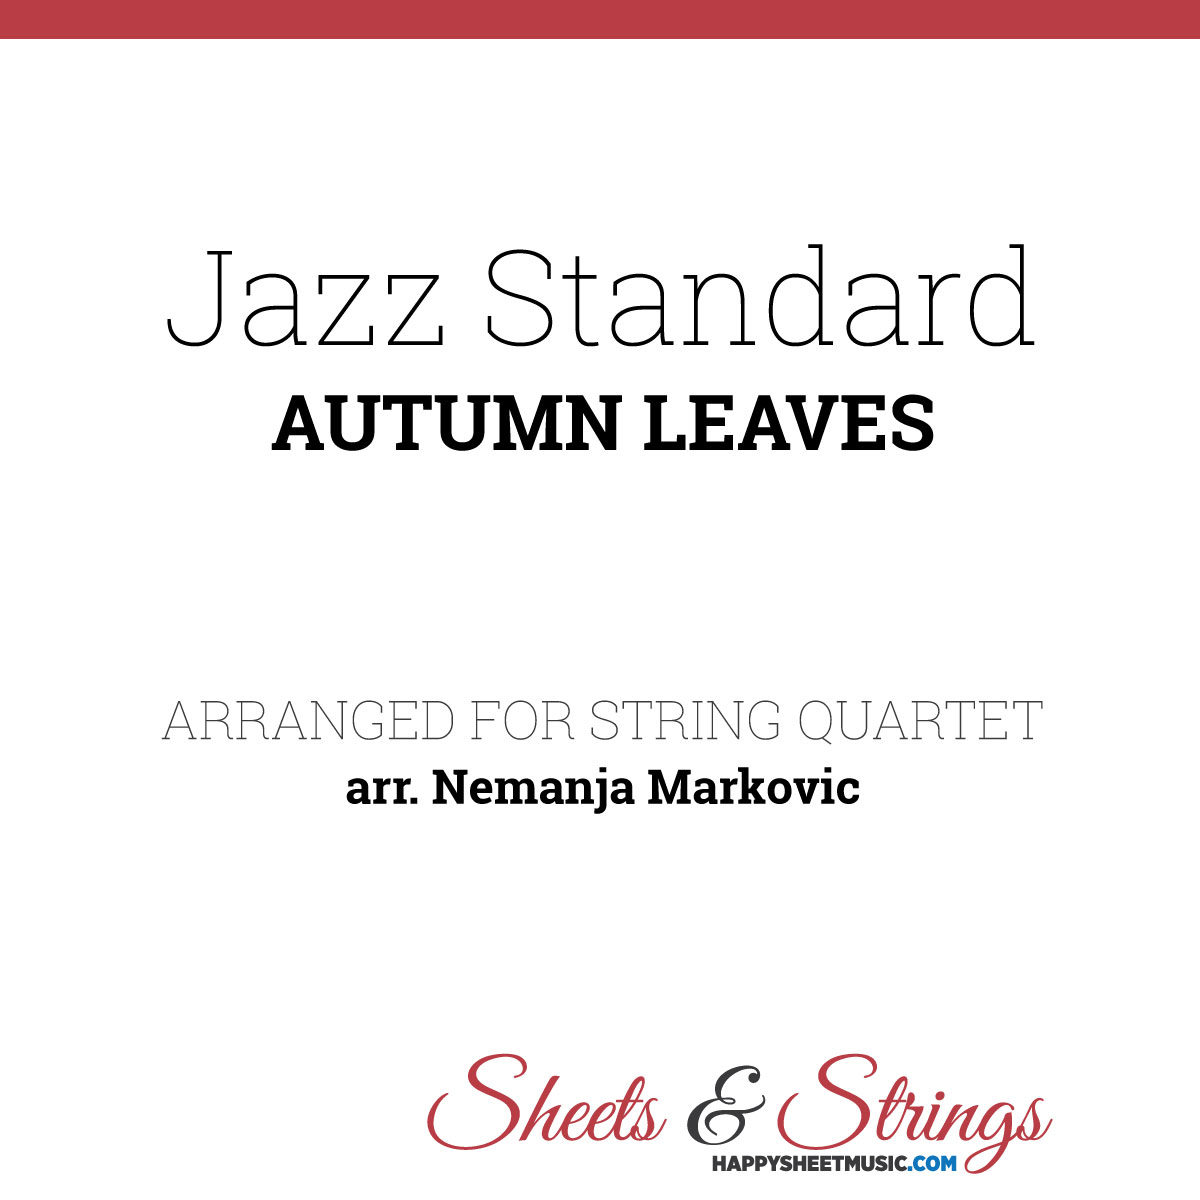 Jazz Standard - Autumn Leaves - Sheet Music for String Quartet - Music Arrangement for String Quartet